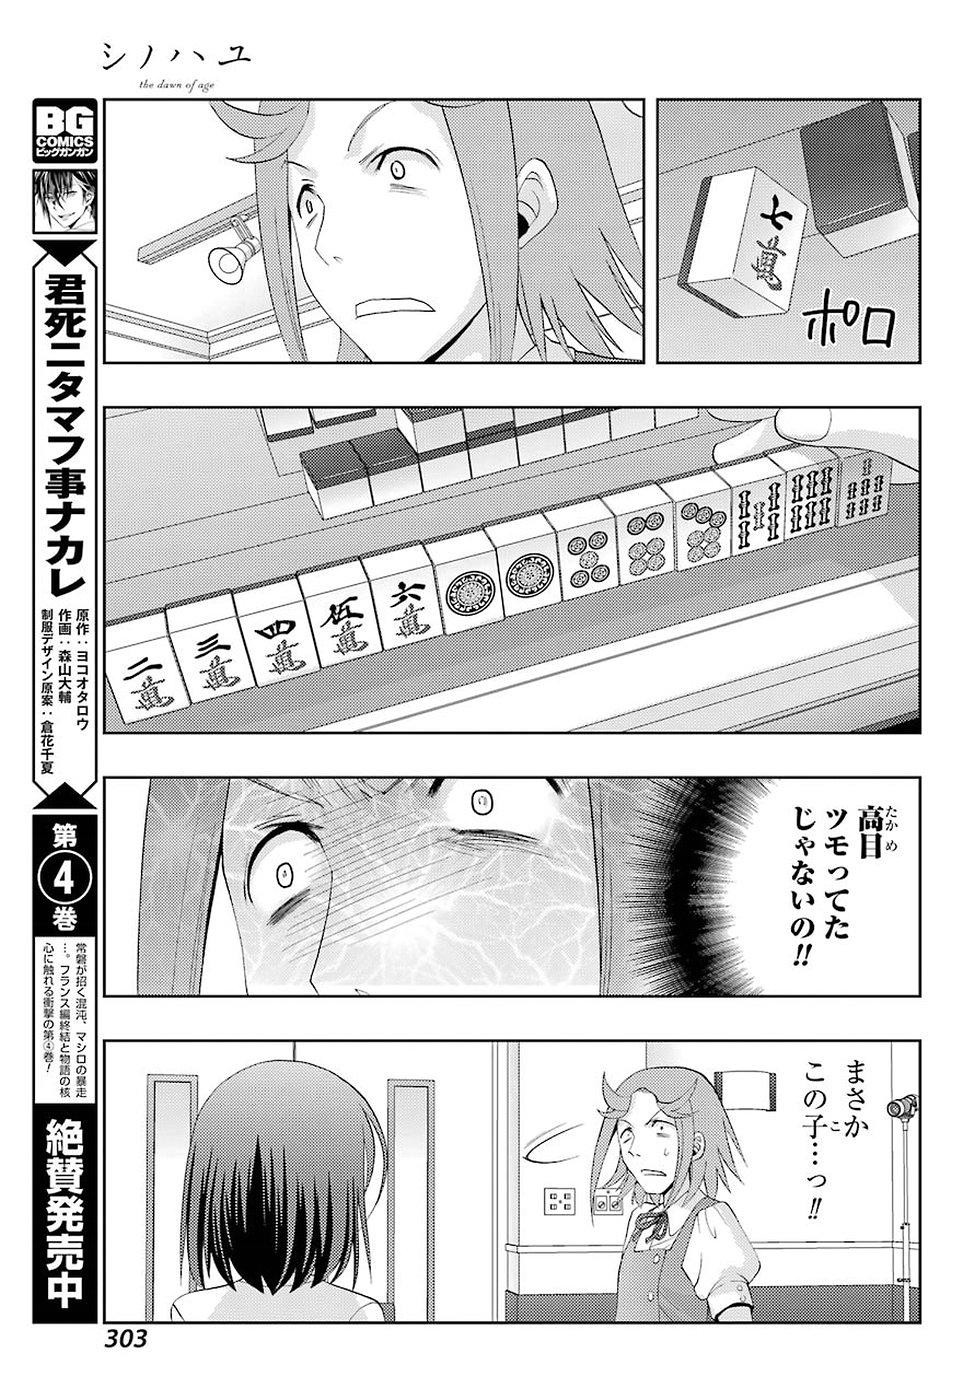 Shinohayu - The Dawn of Age Manga - Chapter 045 - Page 25